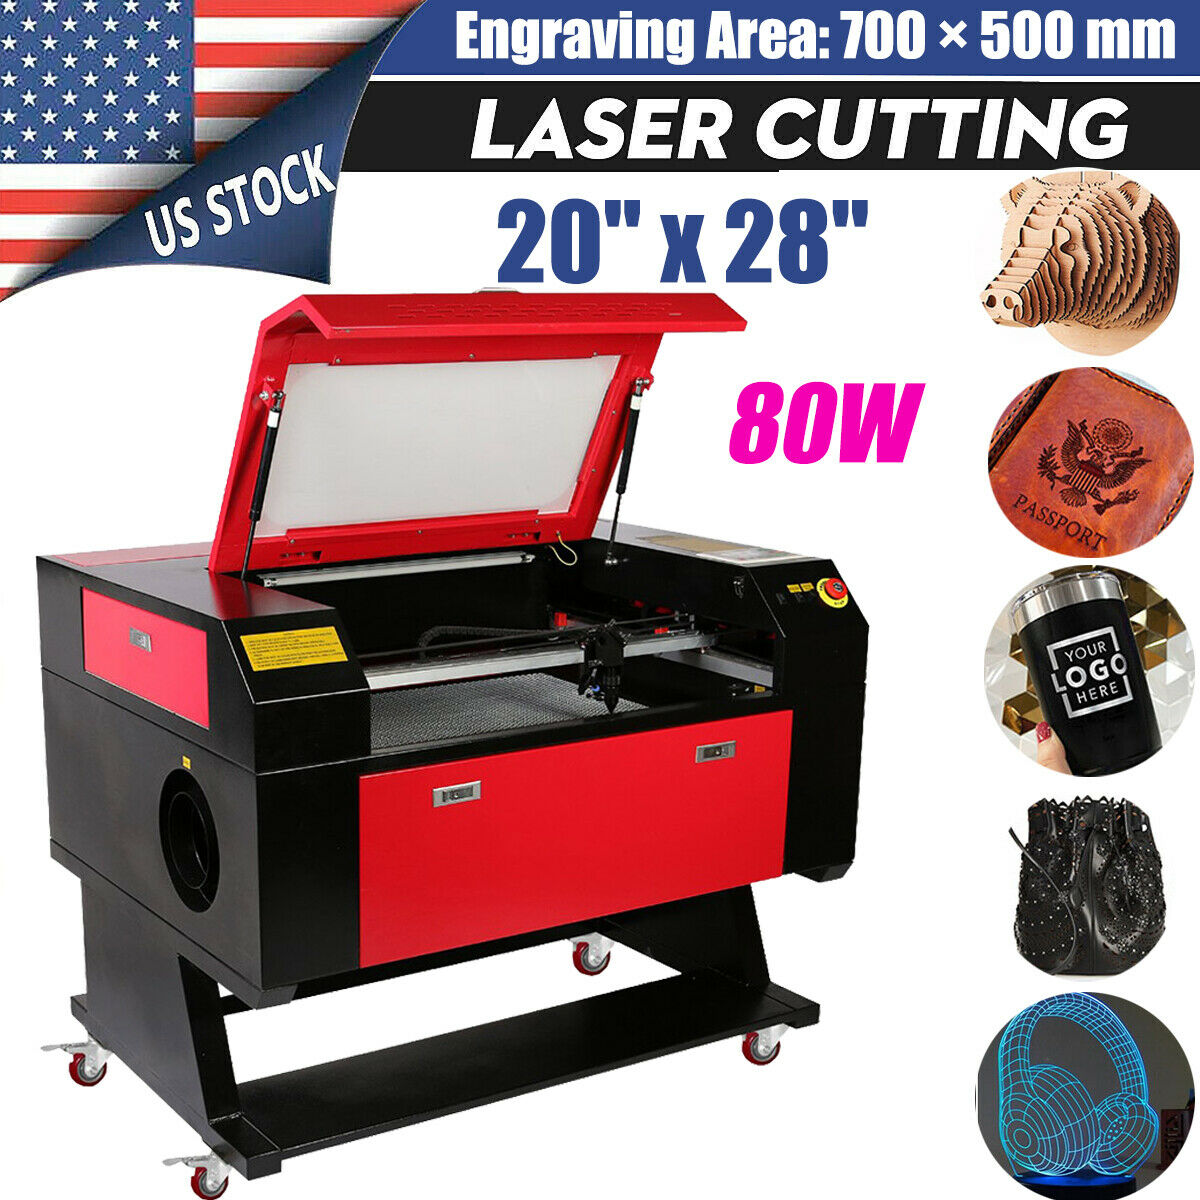 20"x28" Co2 Laser Cutting Machine Engraving Cutting Machine 80w Co2 Laser Tube